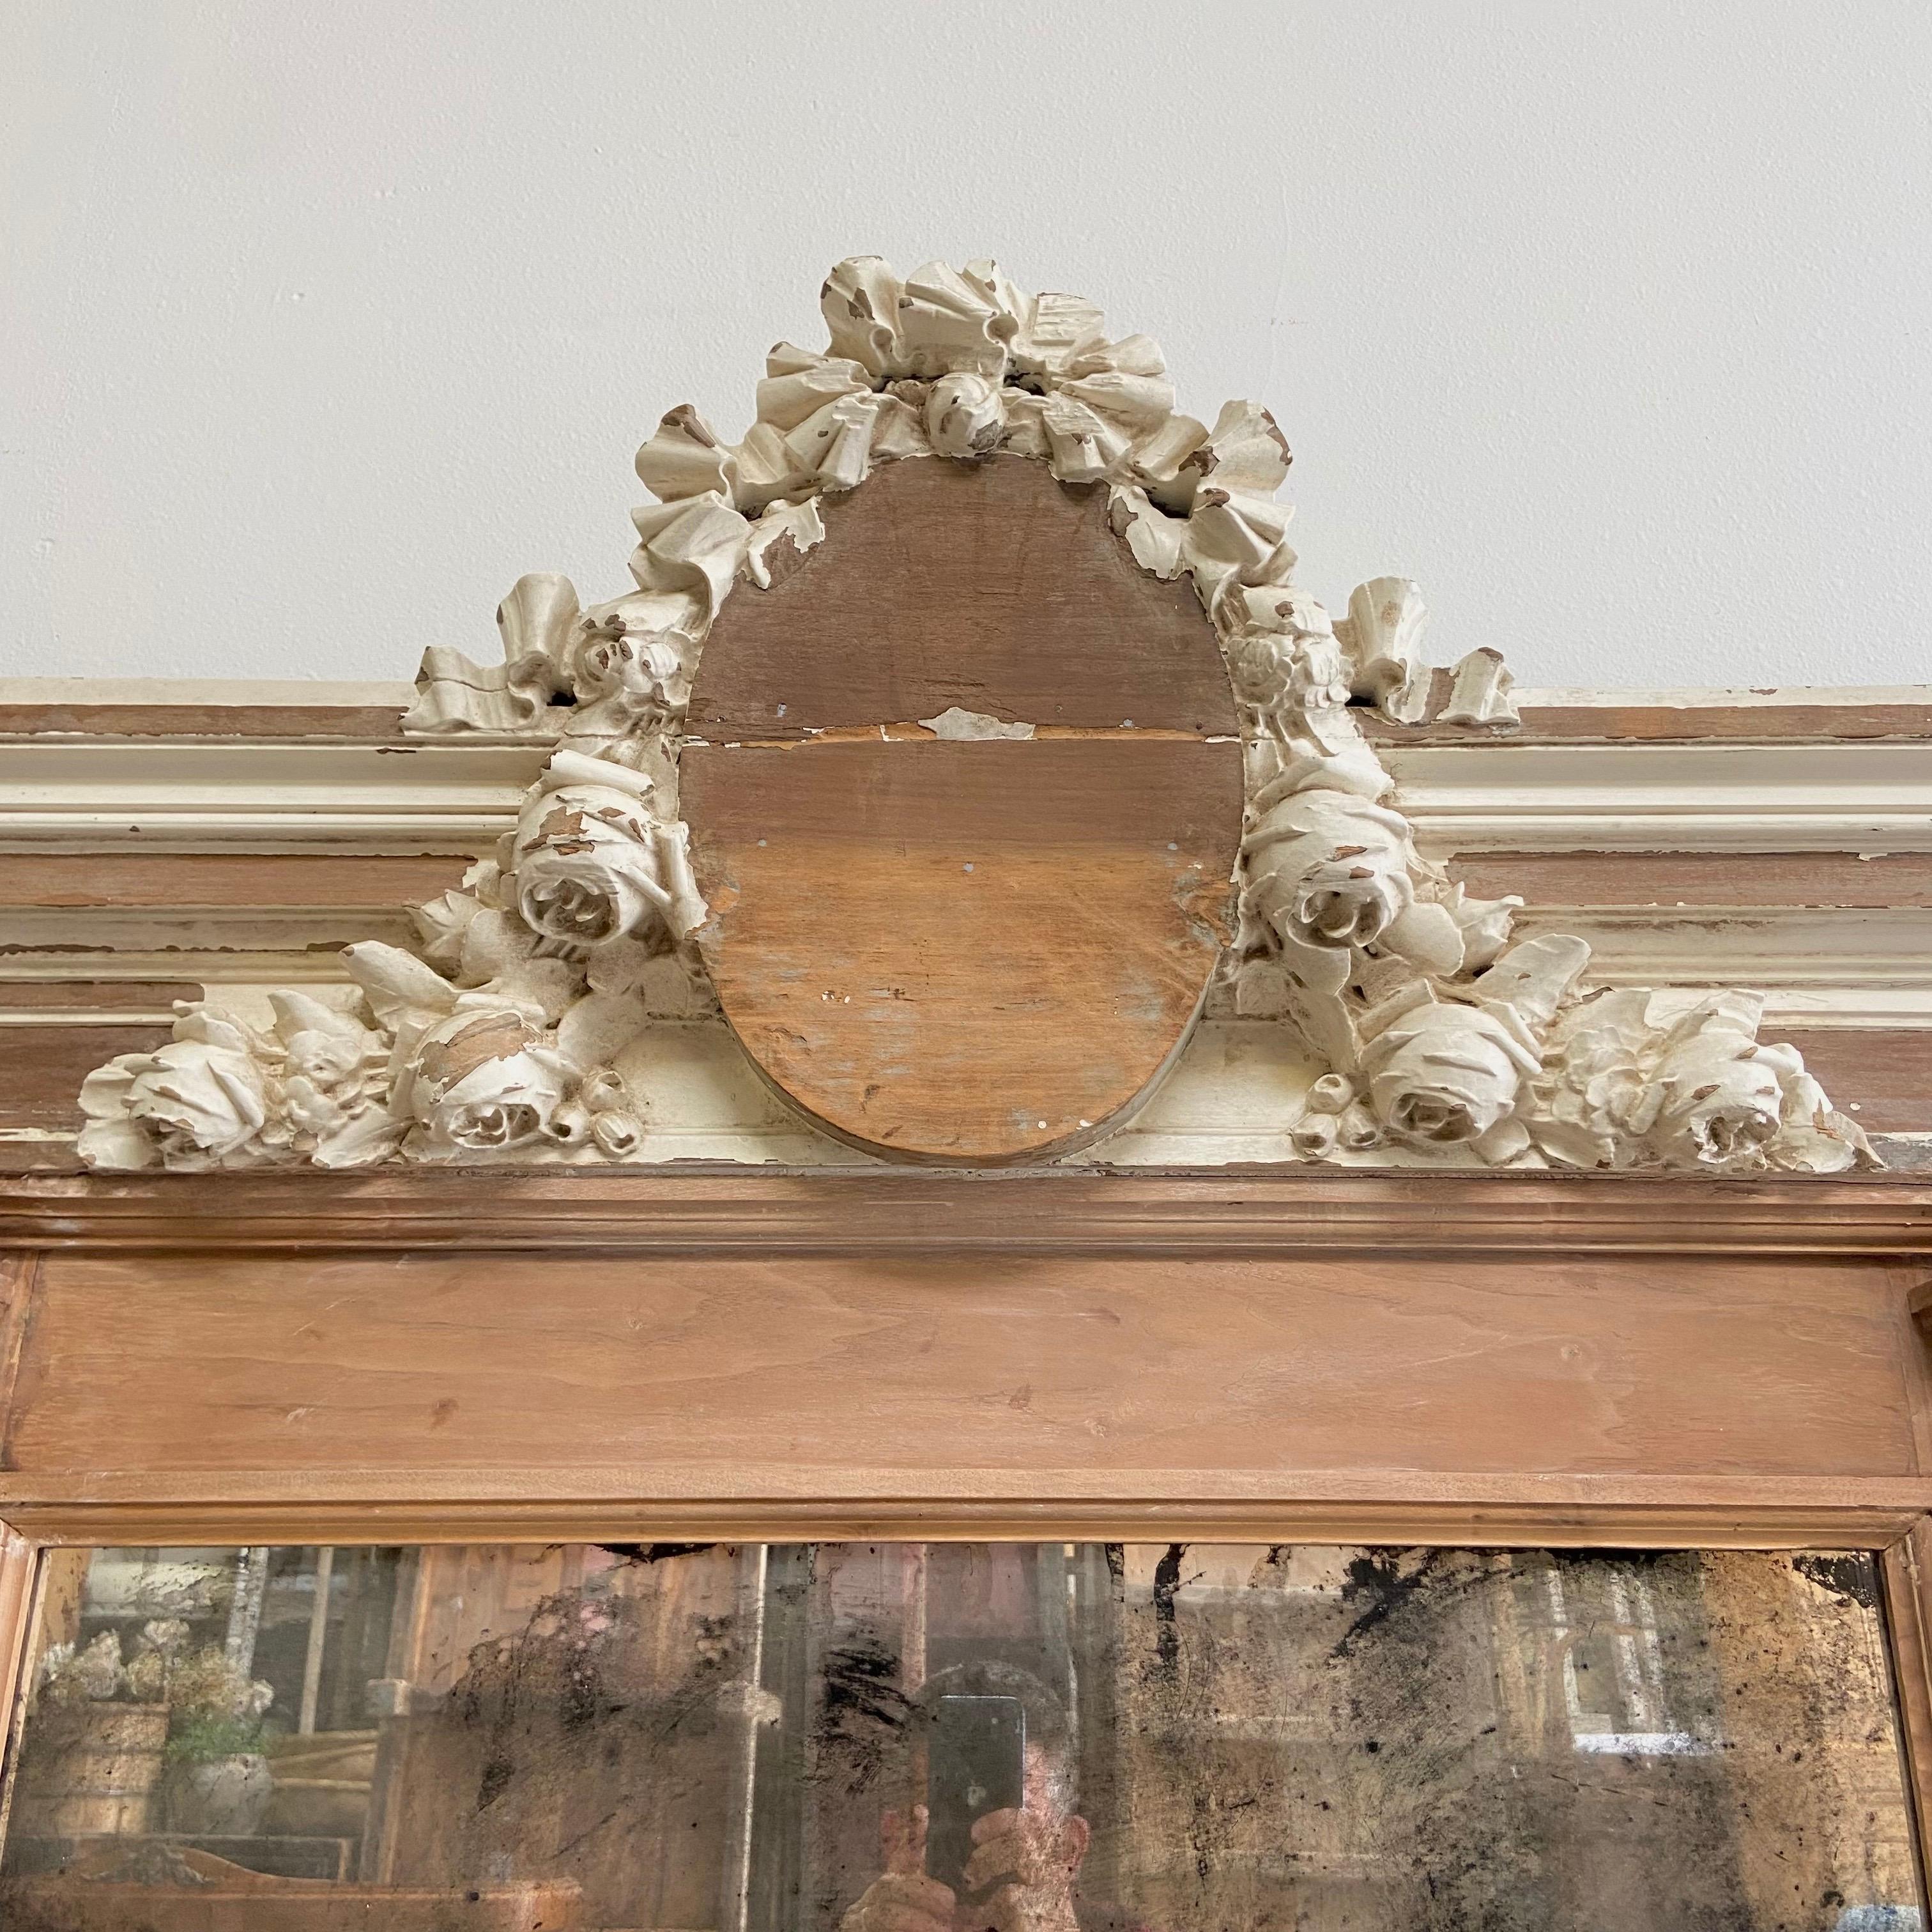 Rose carved mirror 51-1/2” W x 60” H x 7” D
Mirror: 29” W x 32” H
Made from an antique architectural header.